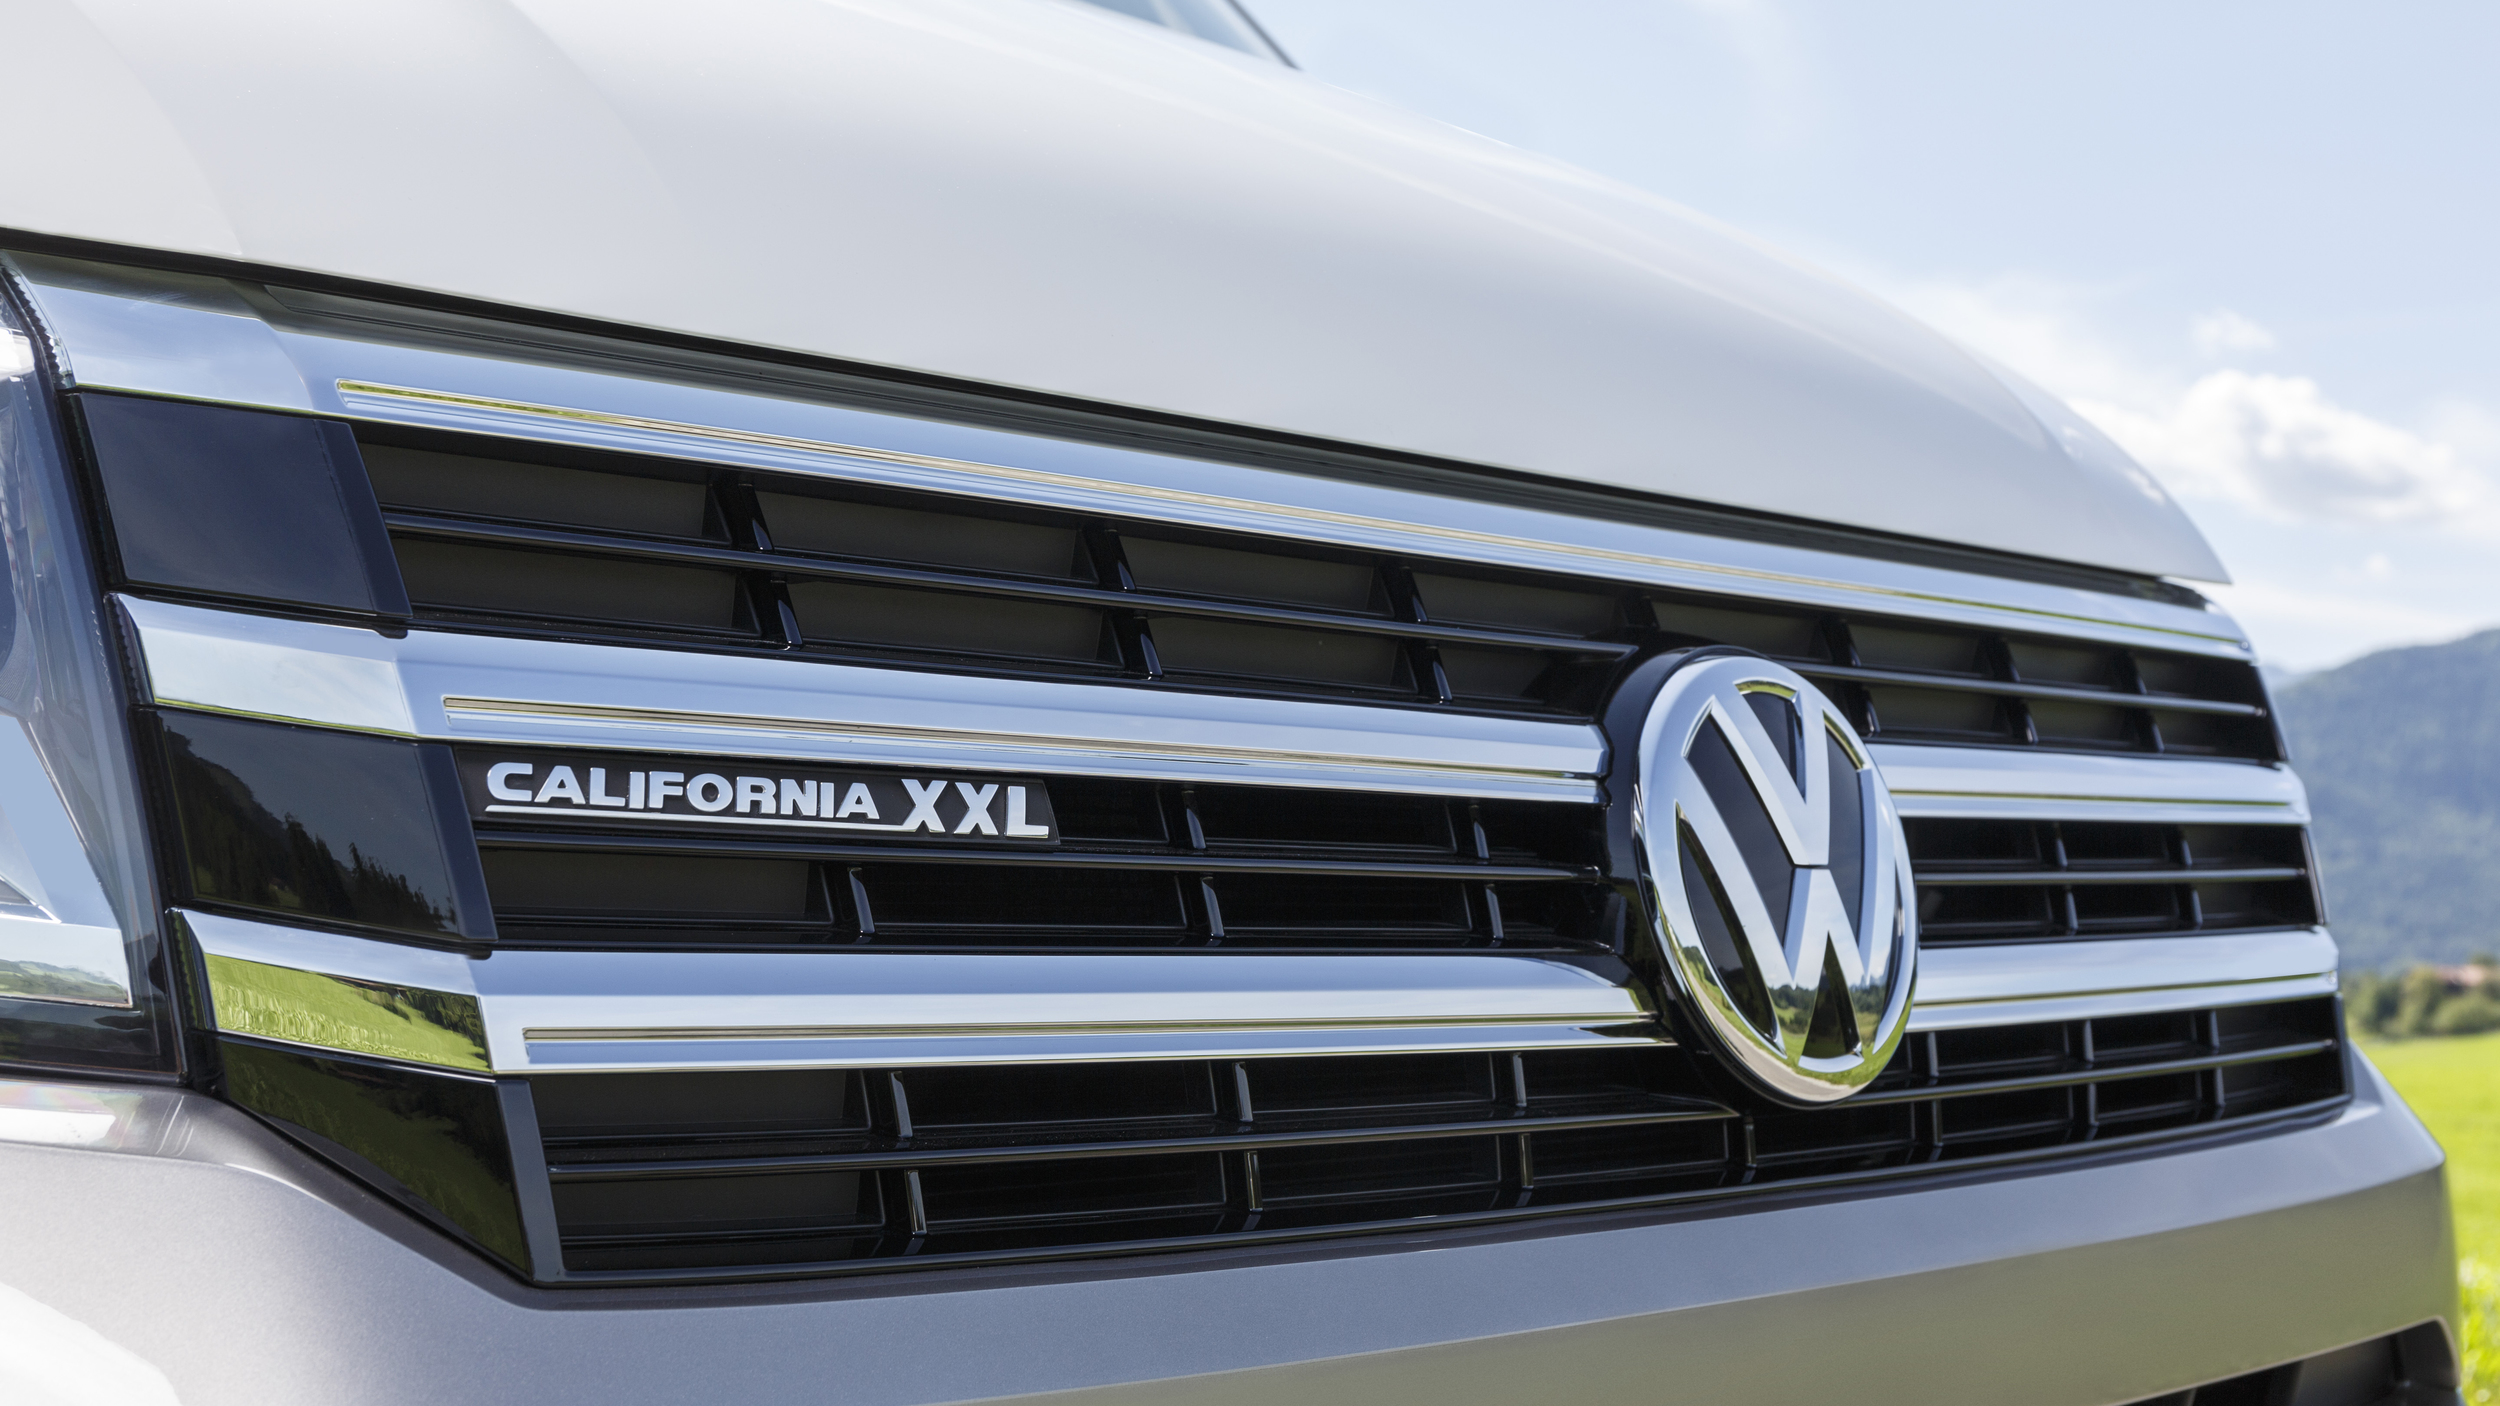 VW California XXL camper van